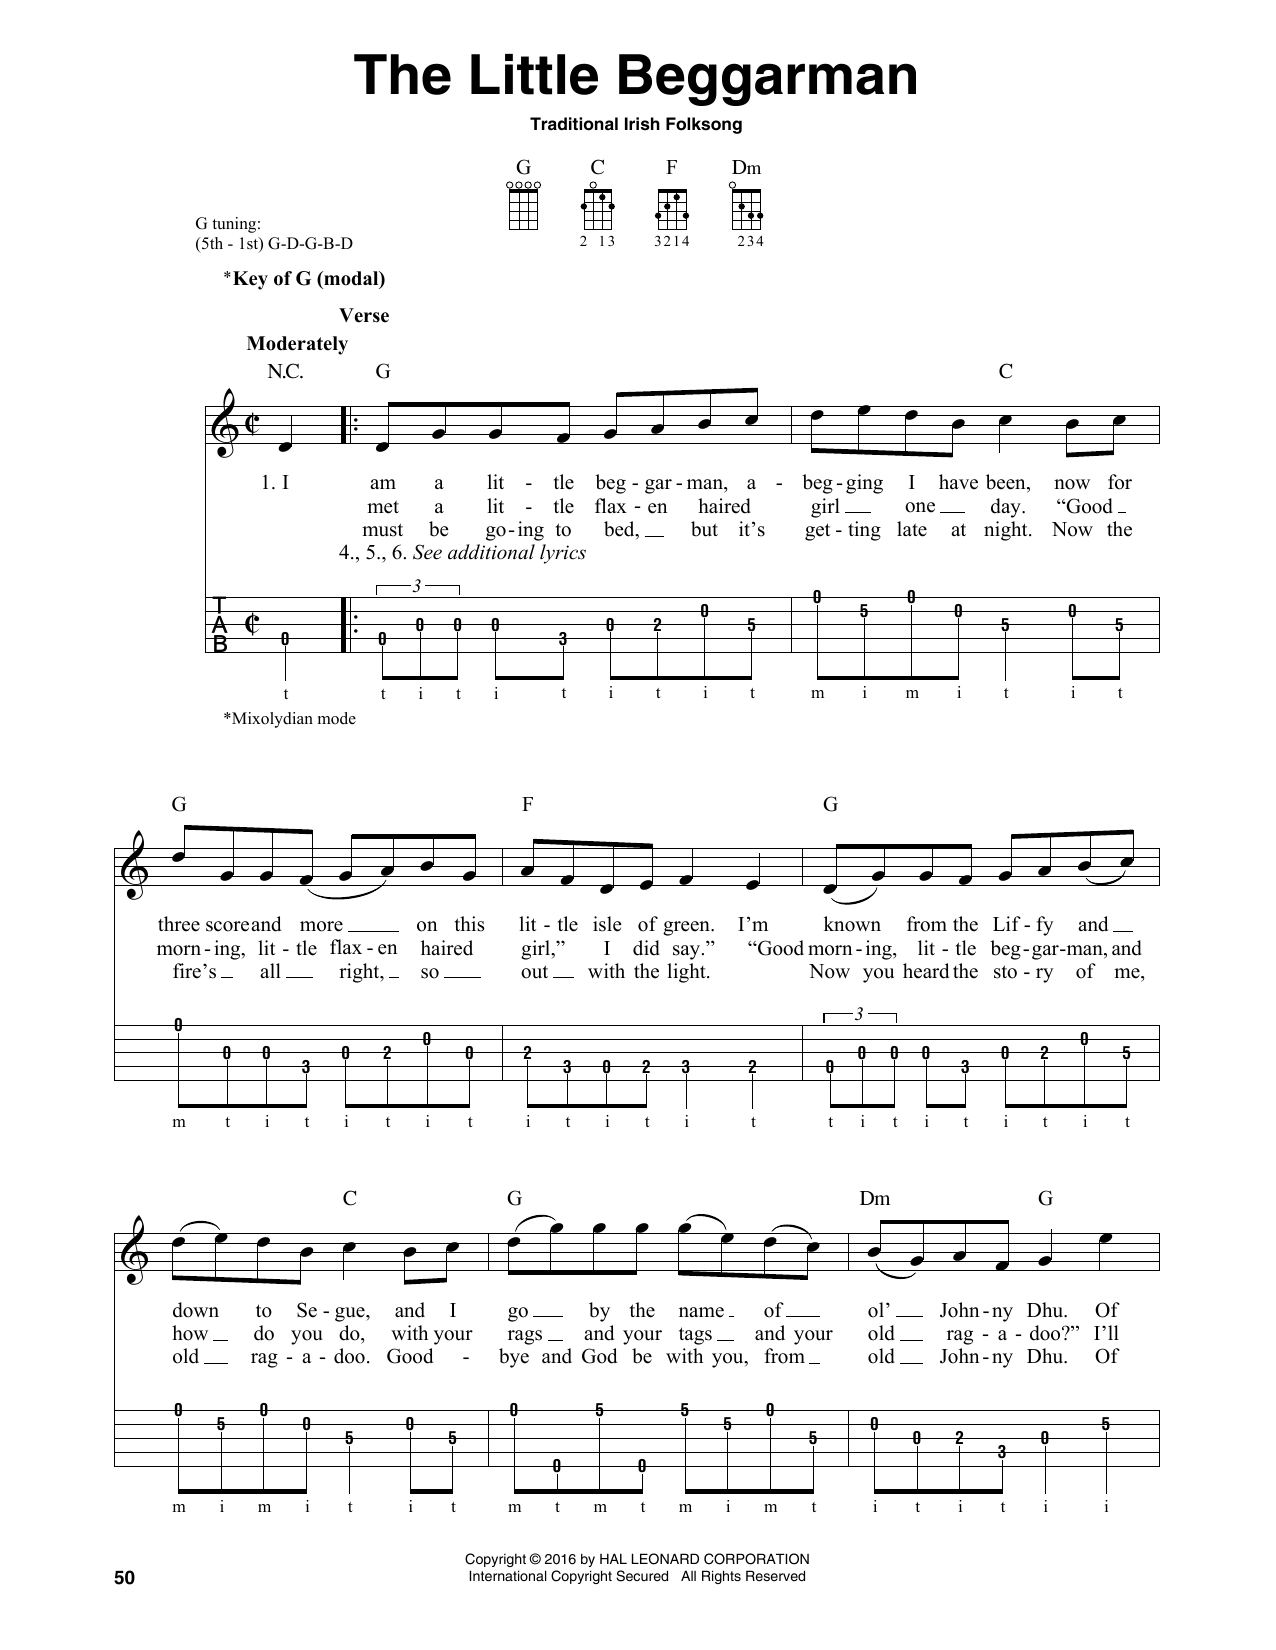 Traditional Irish Folk Song The Little Beggarman Sheet Music Notes & Chords for Guitar Ensemble - Download or Print PDF